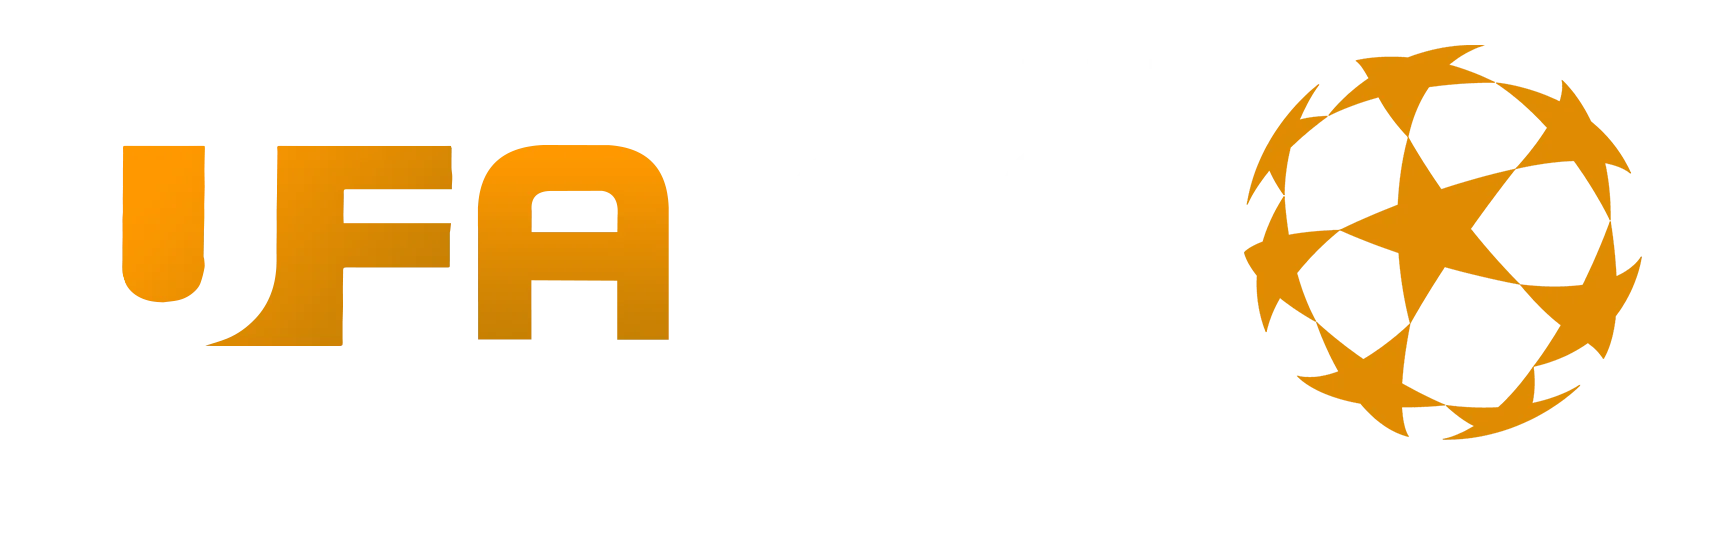 UFA168AUTO logo text